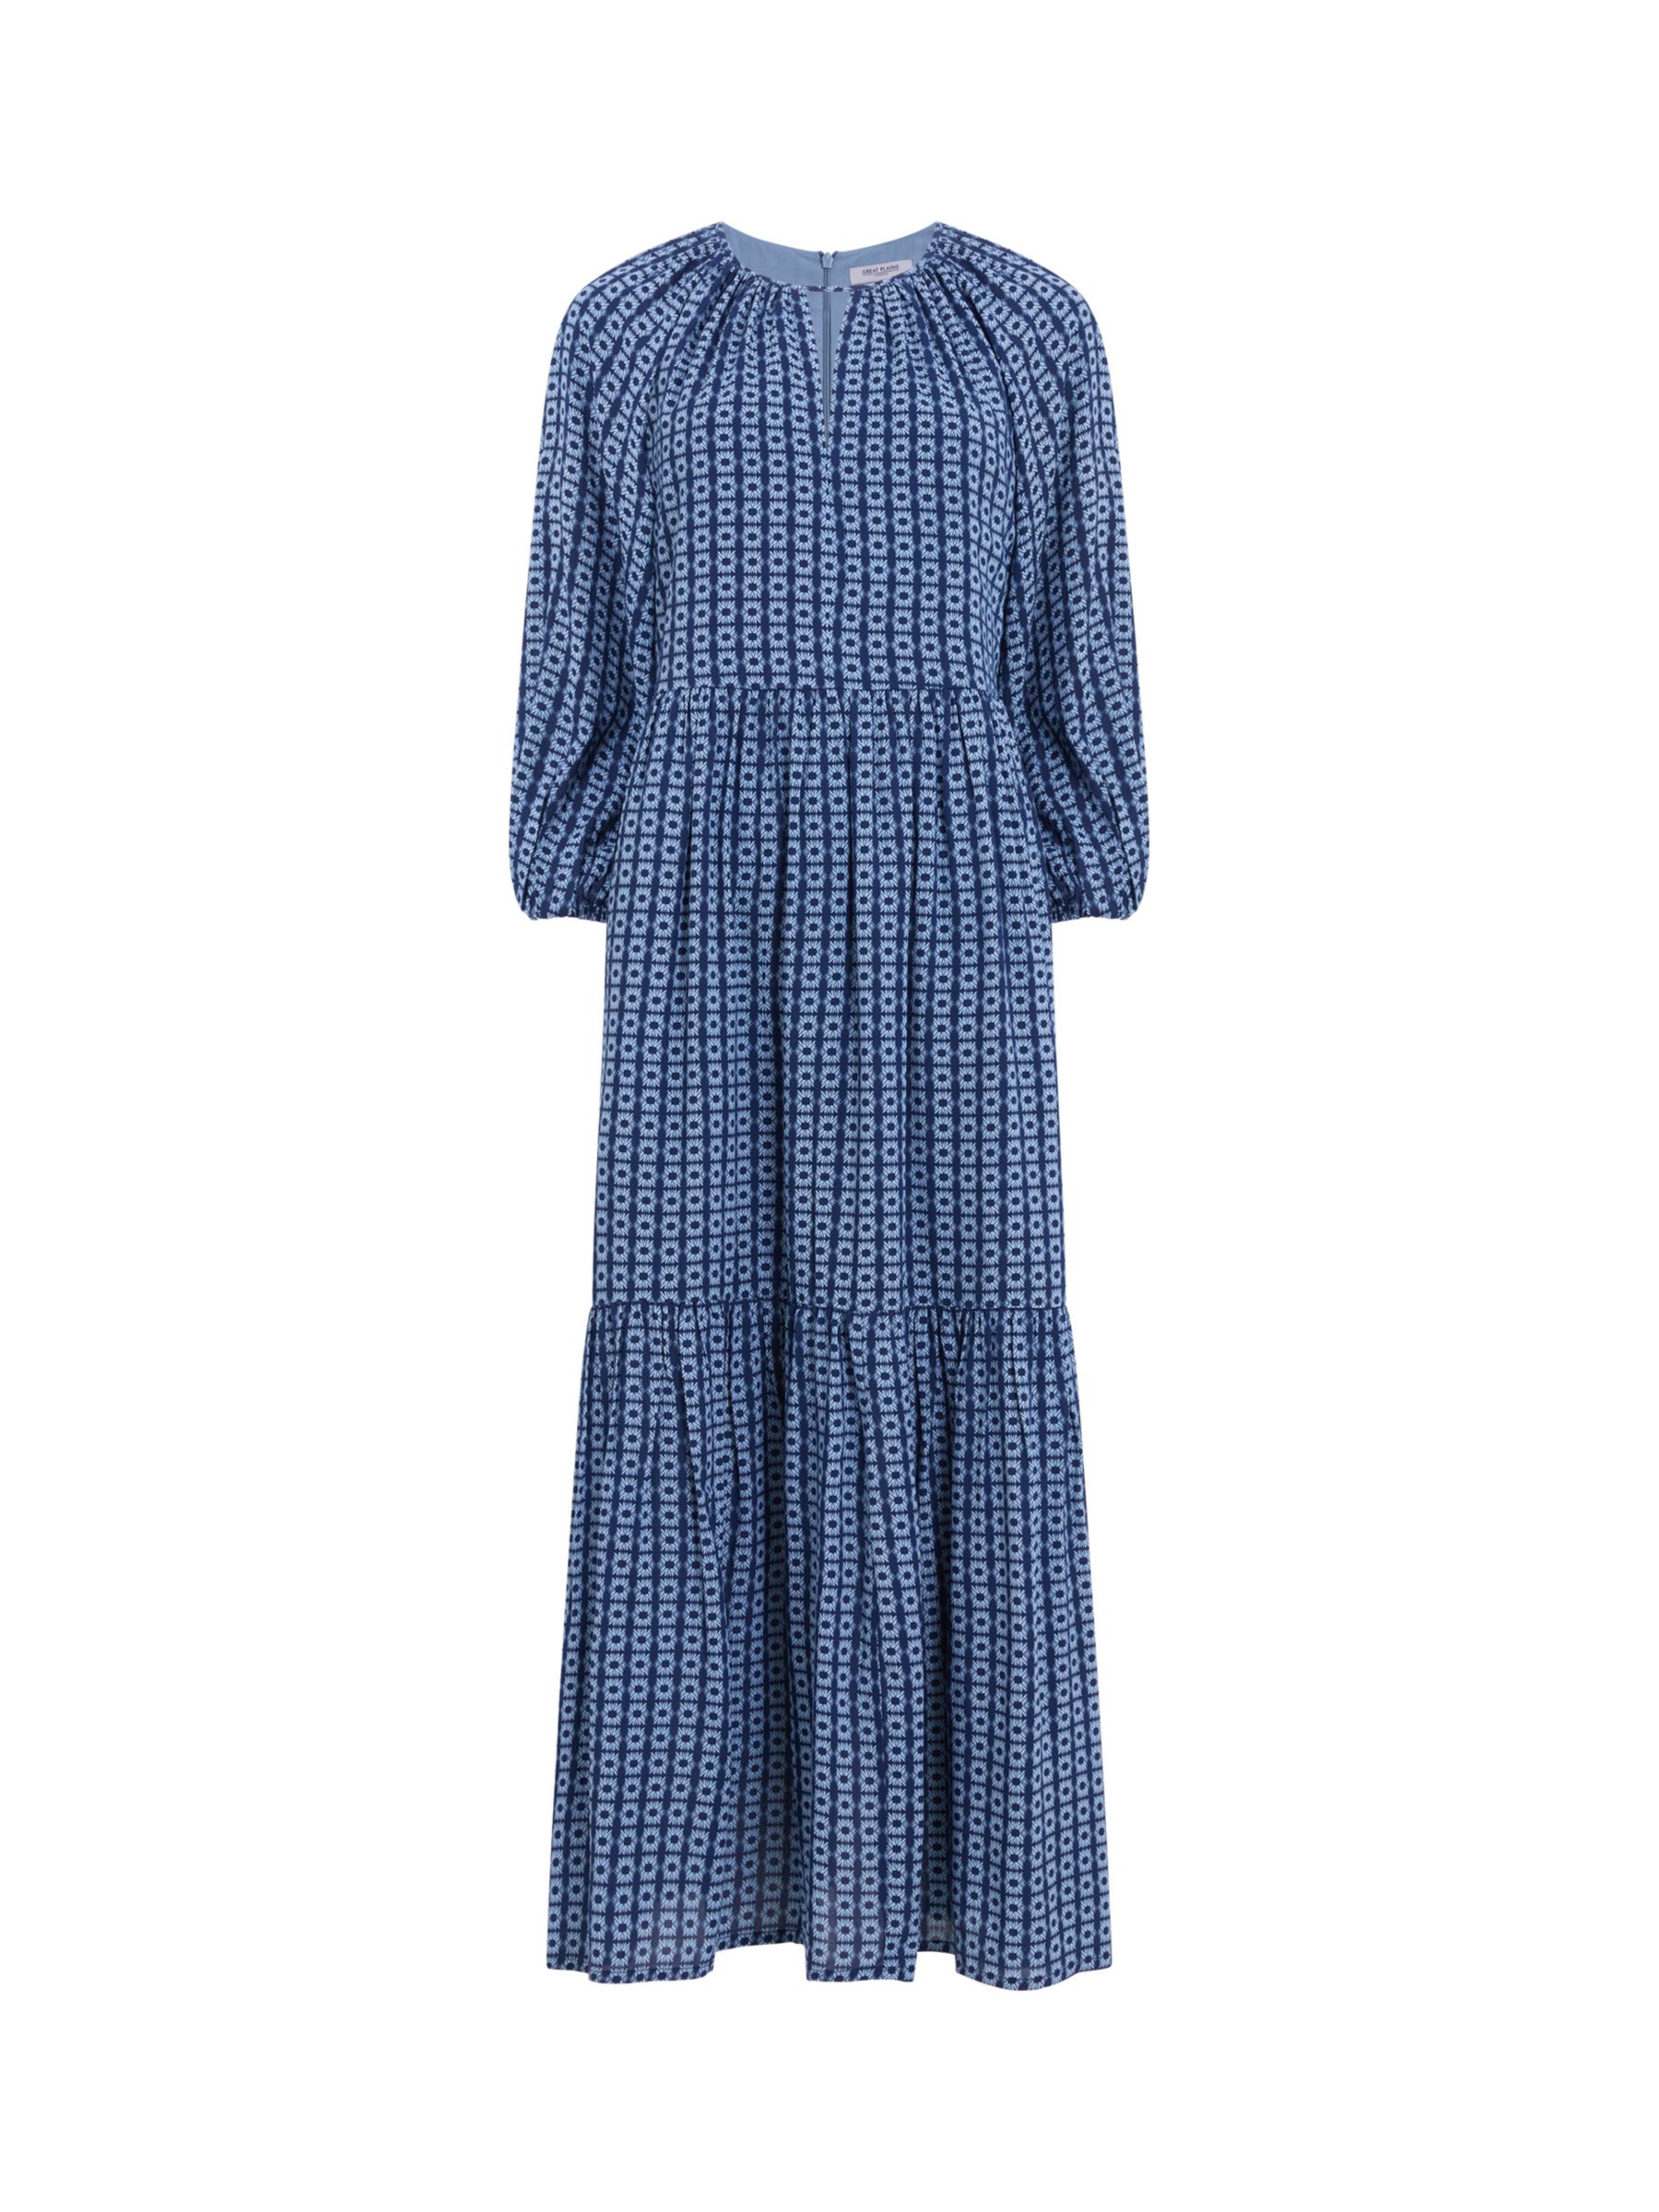 Buy Great Plains Tangier Ecovero Maxi Dress, Blue Online at johnlewis.com